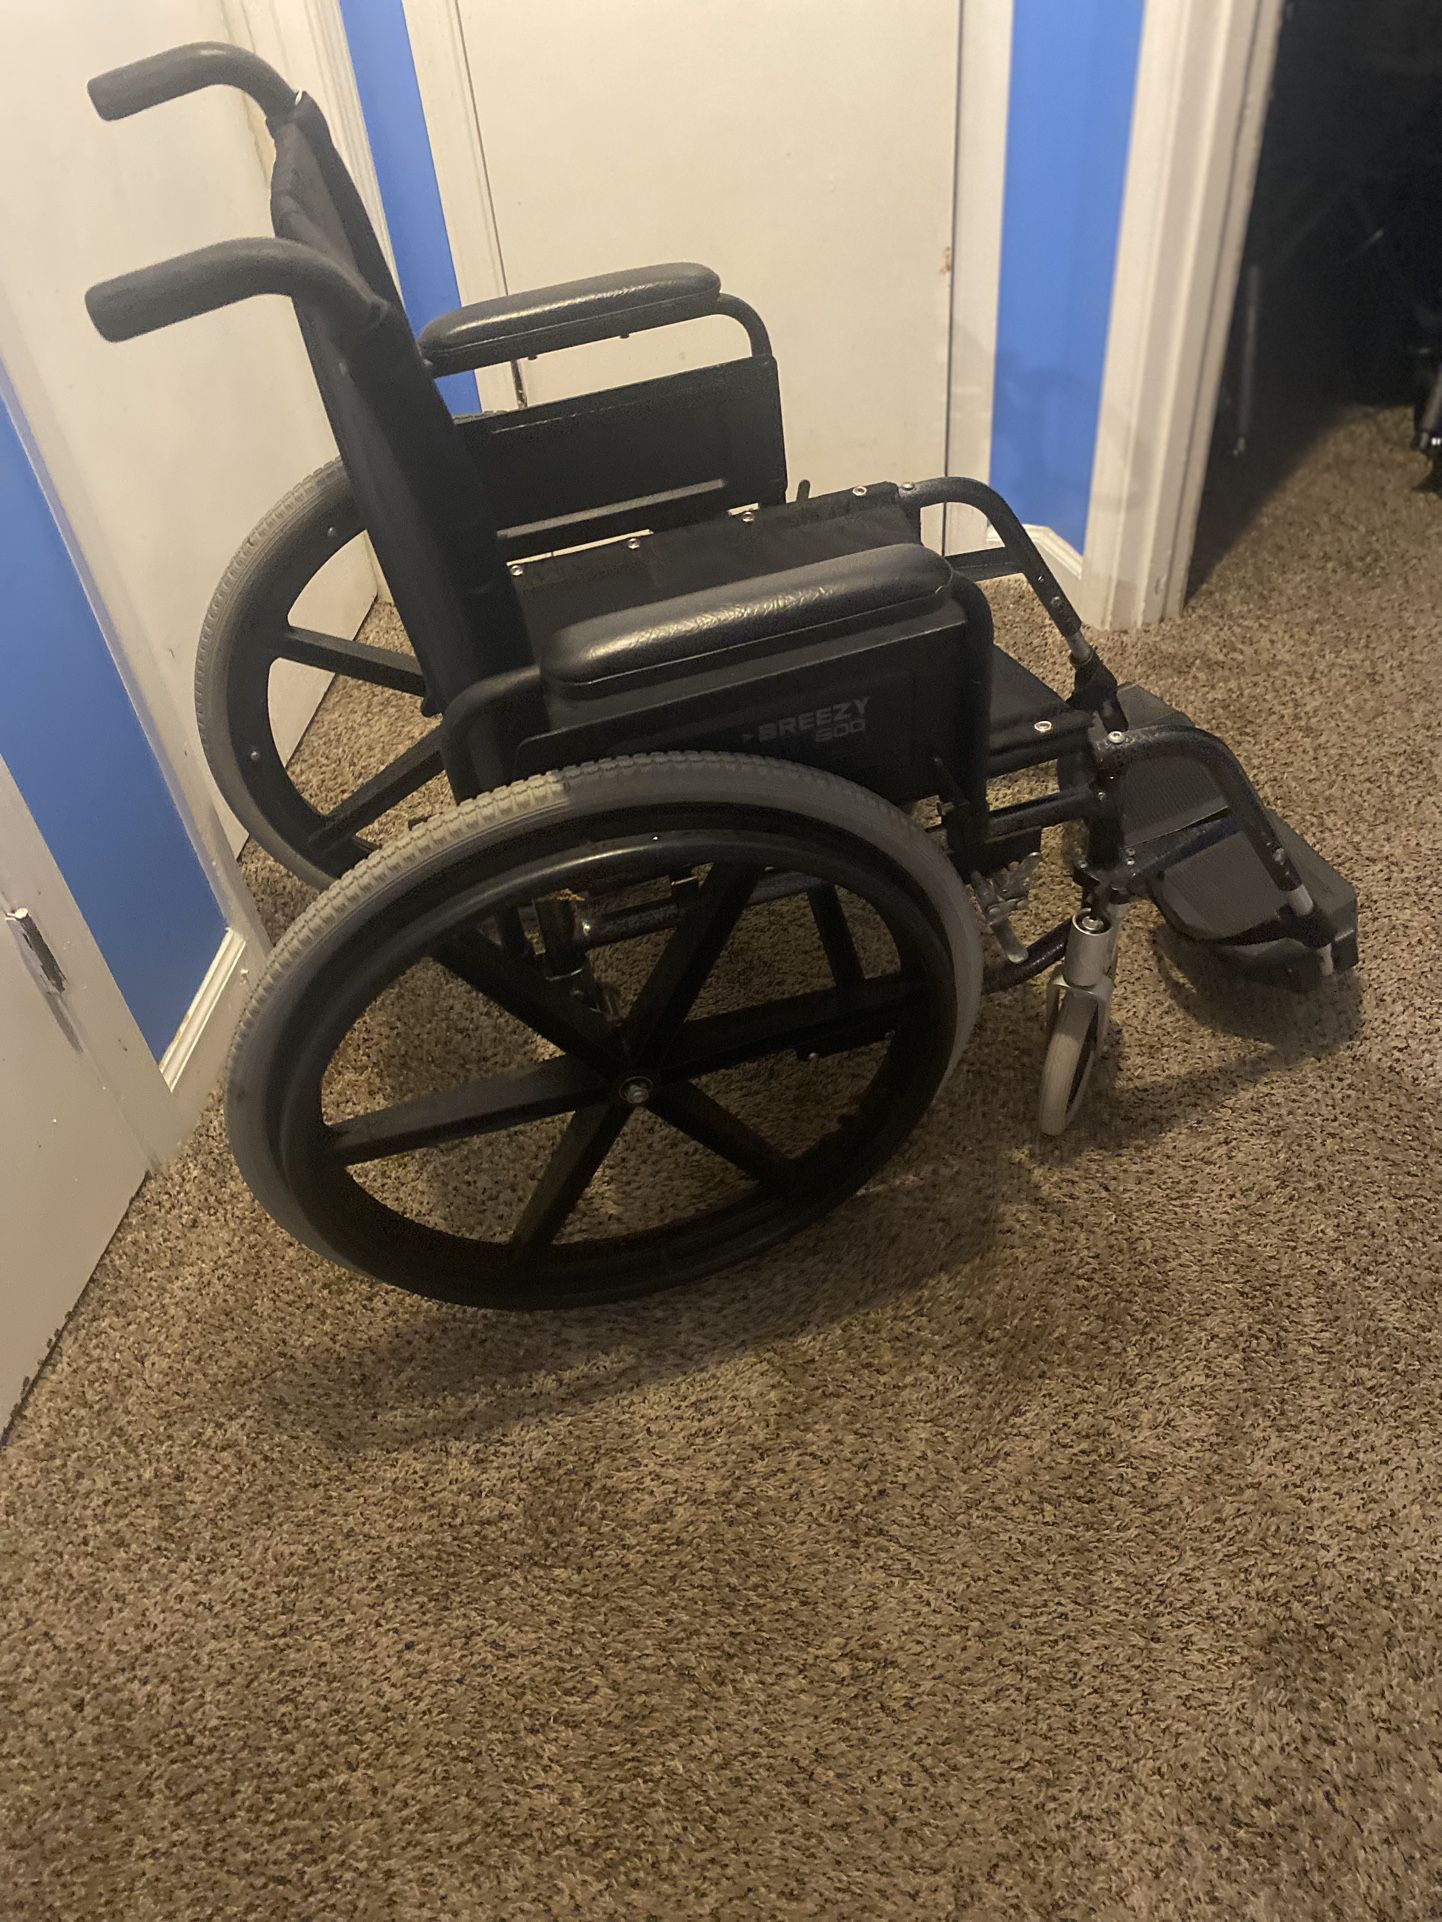 Sunrise Medical Breezy 600 Lightweight Manual Wheelchair W/17” Seat Width + 16” Depth 